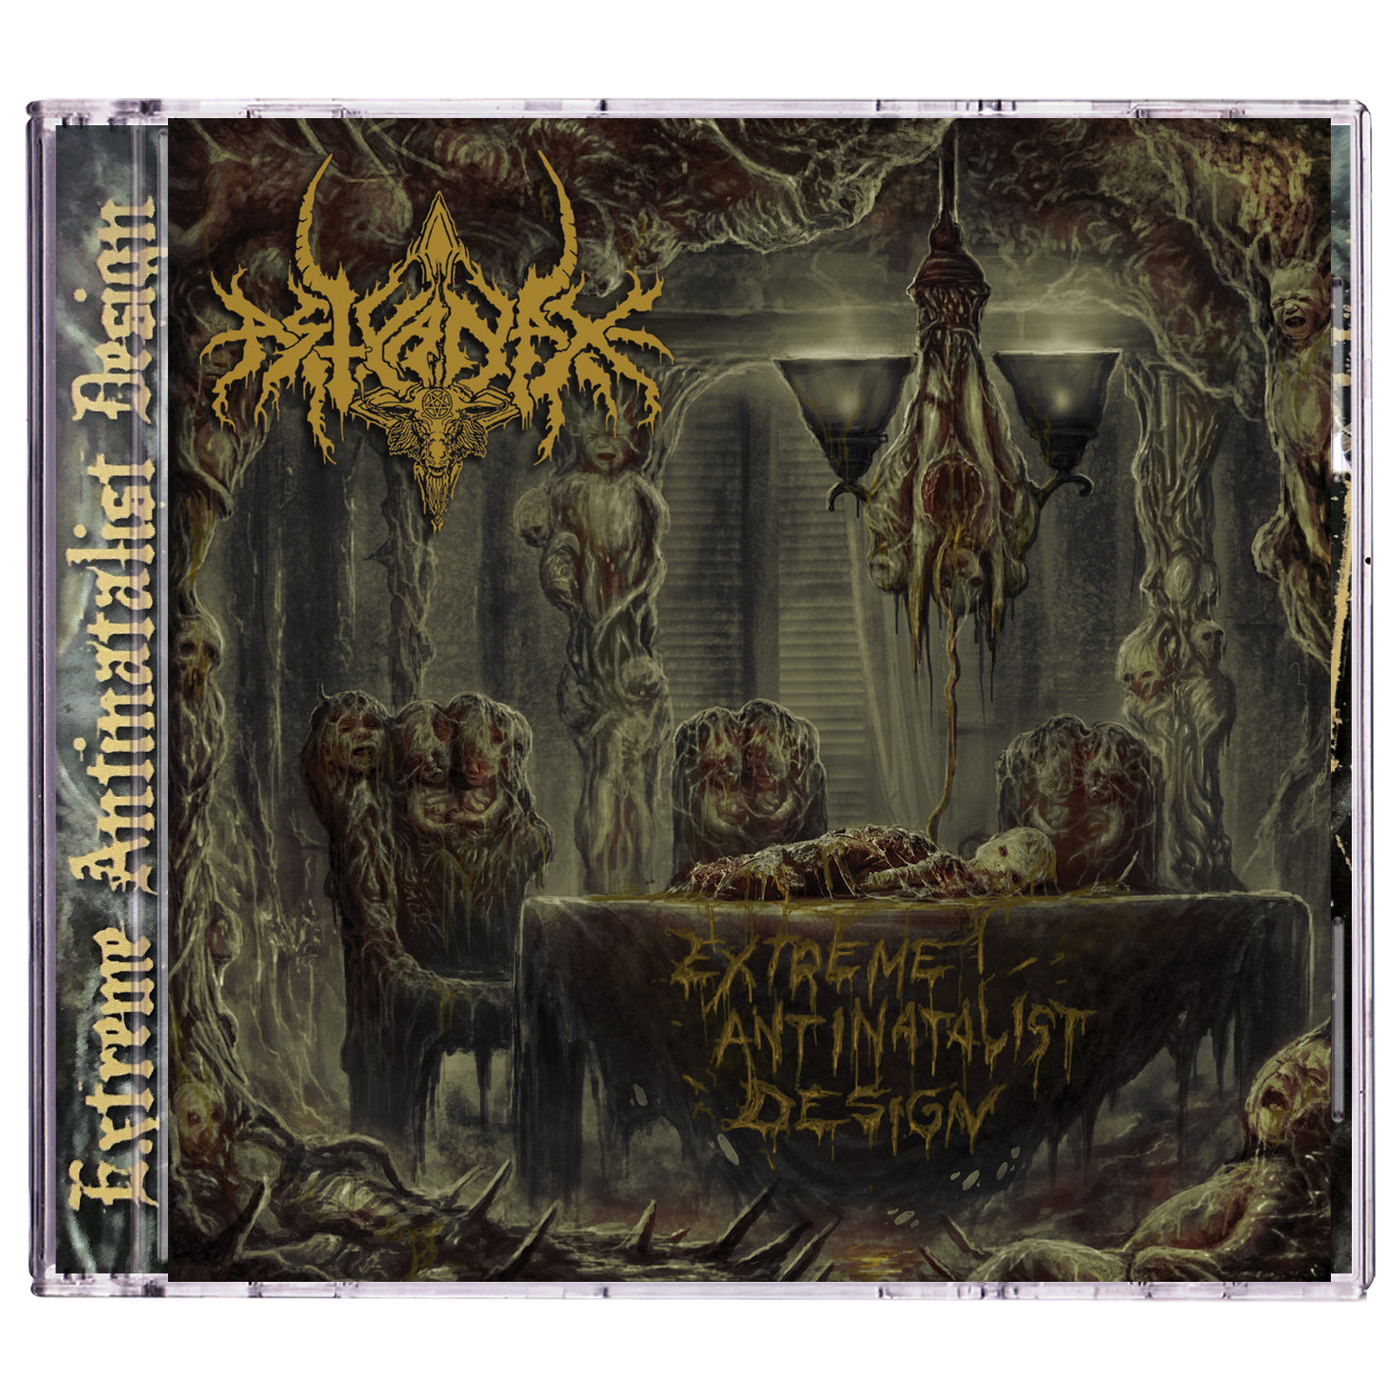 Astyanax 'Extreme Antinatalist Design' CD